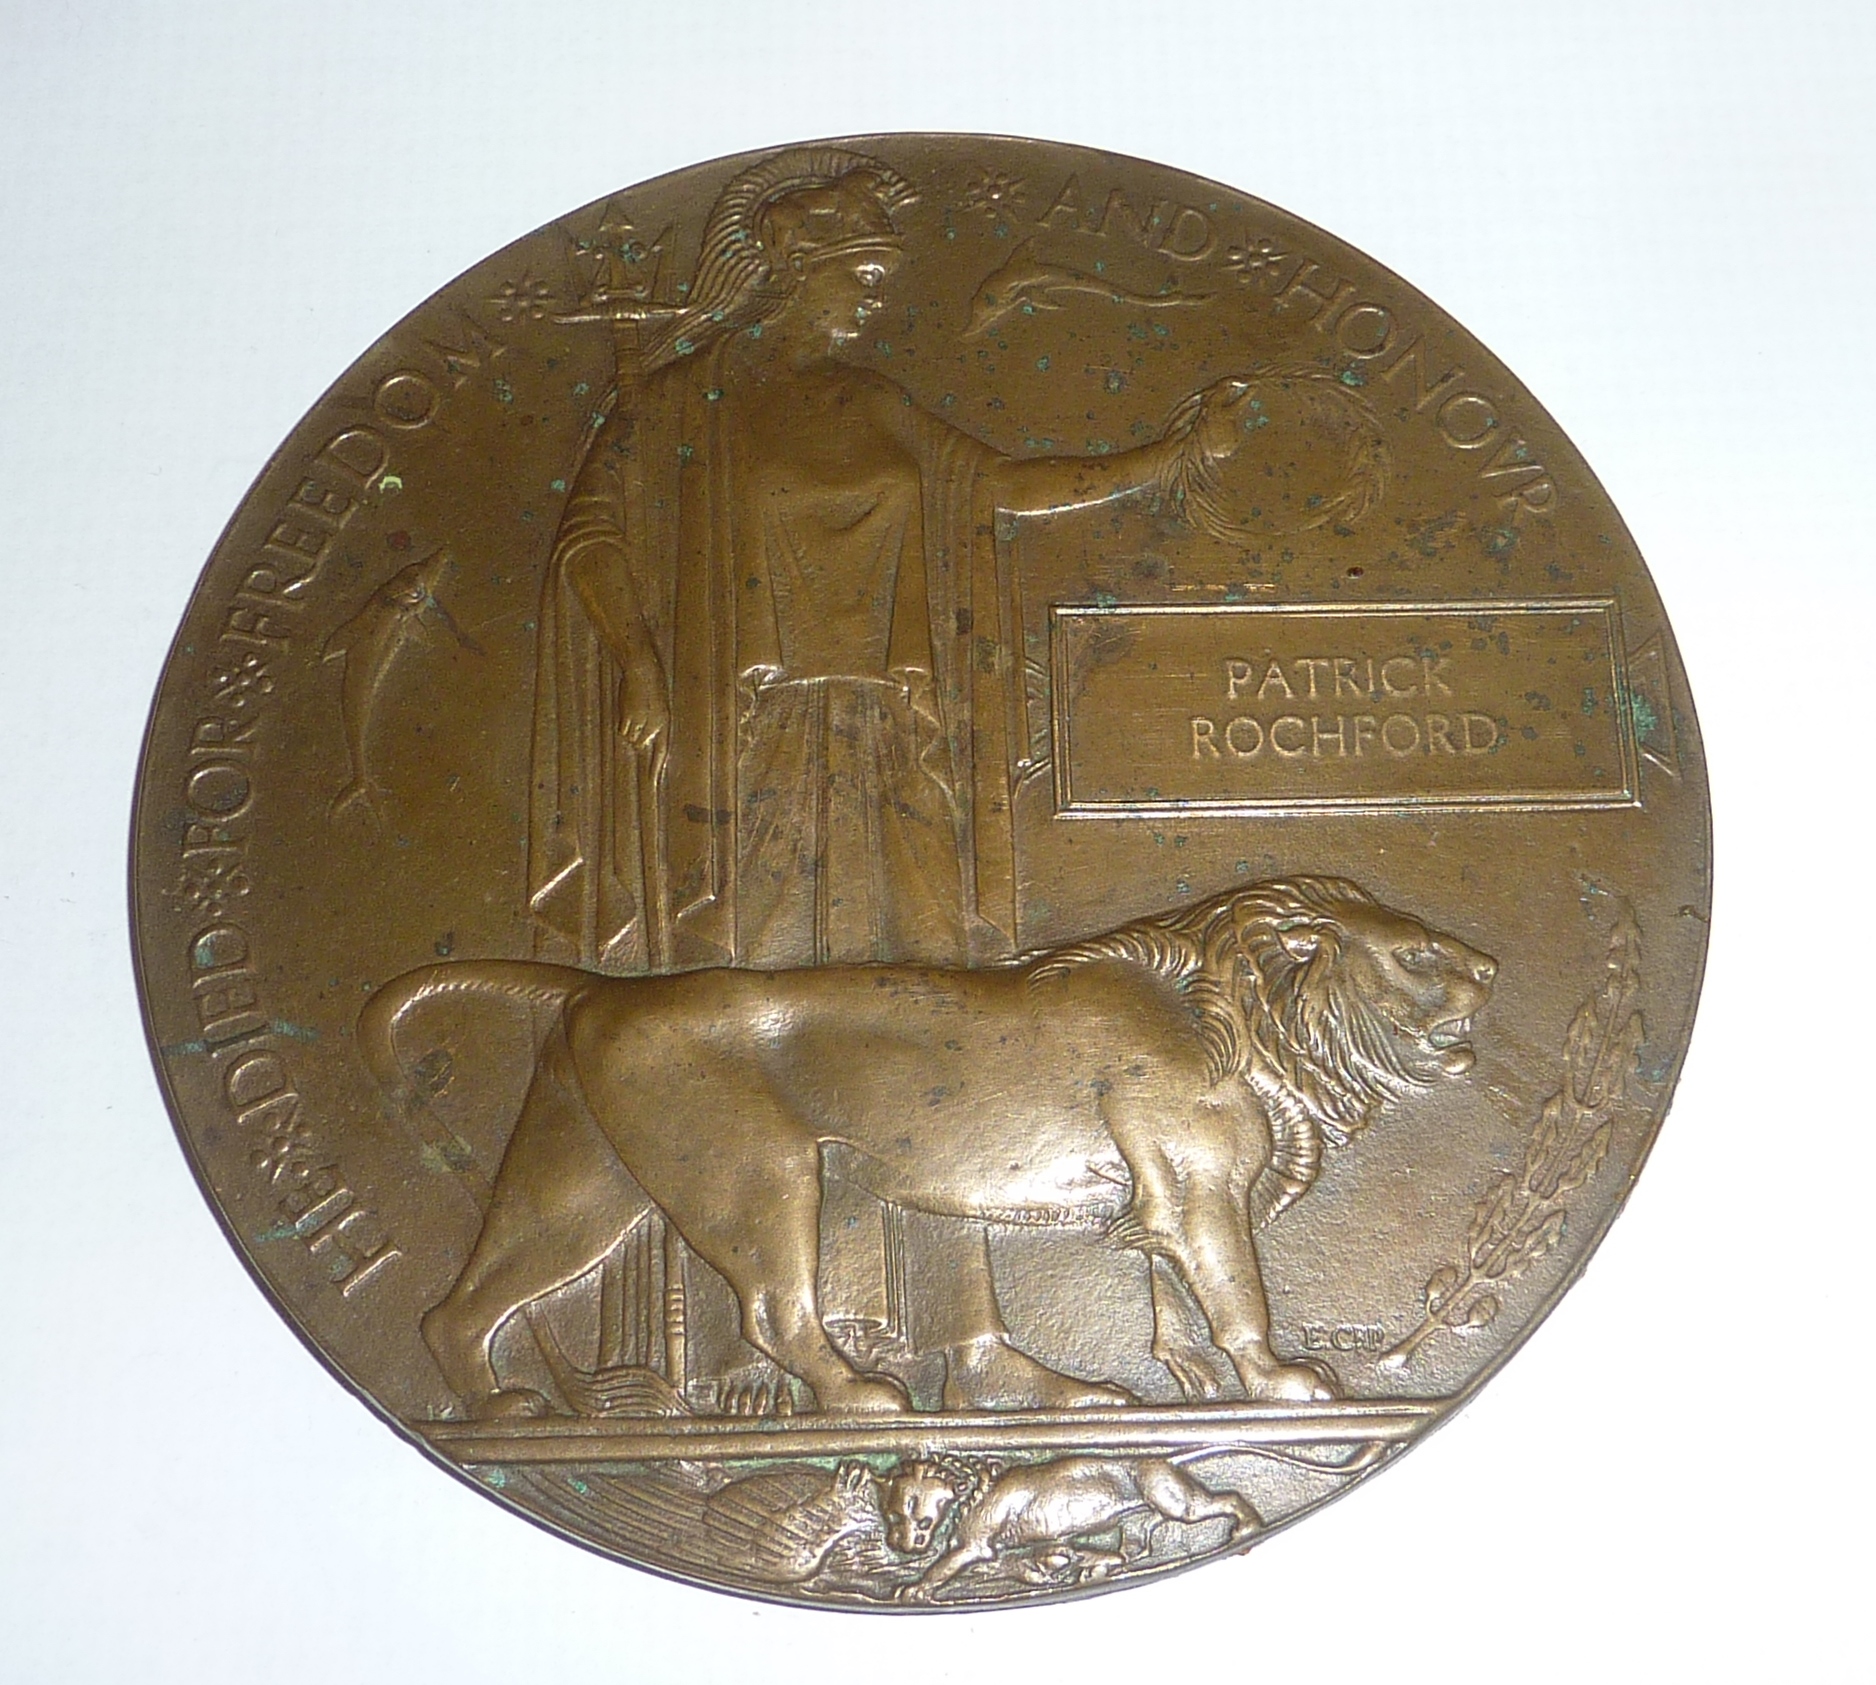 WWI memorial plaque for Patrick Rochford